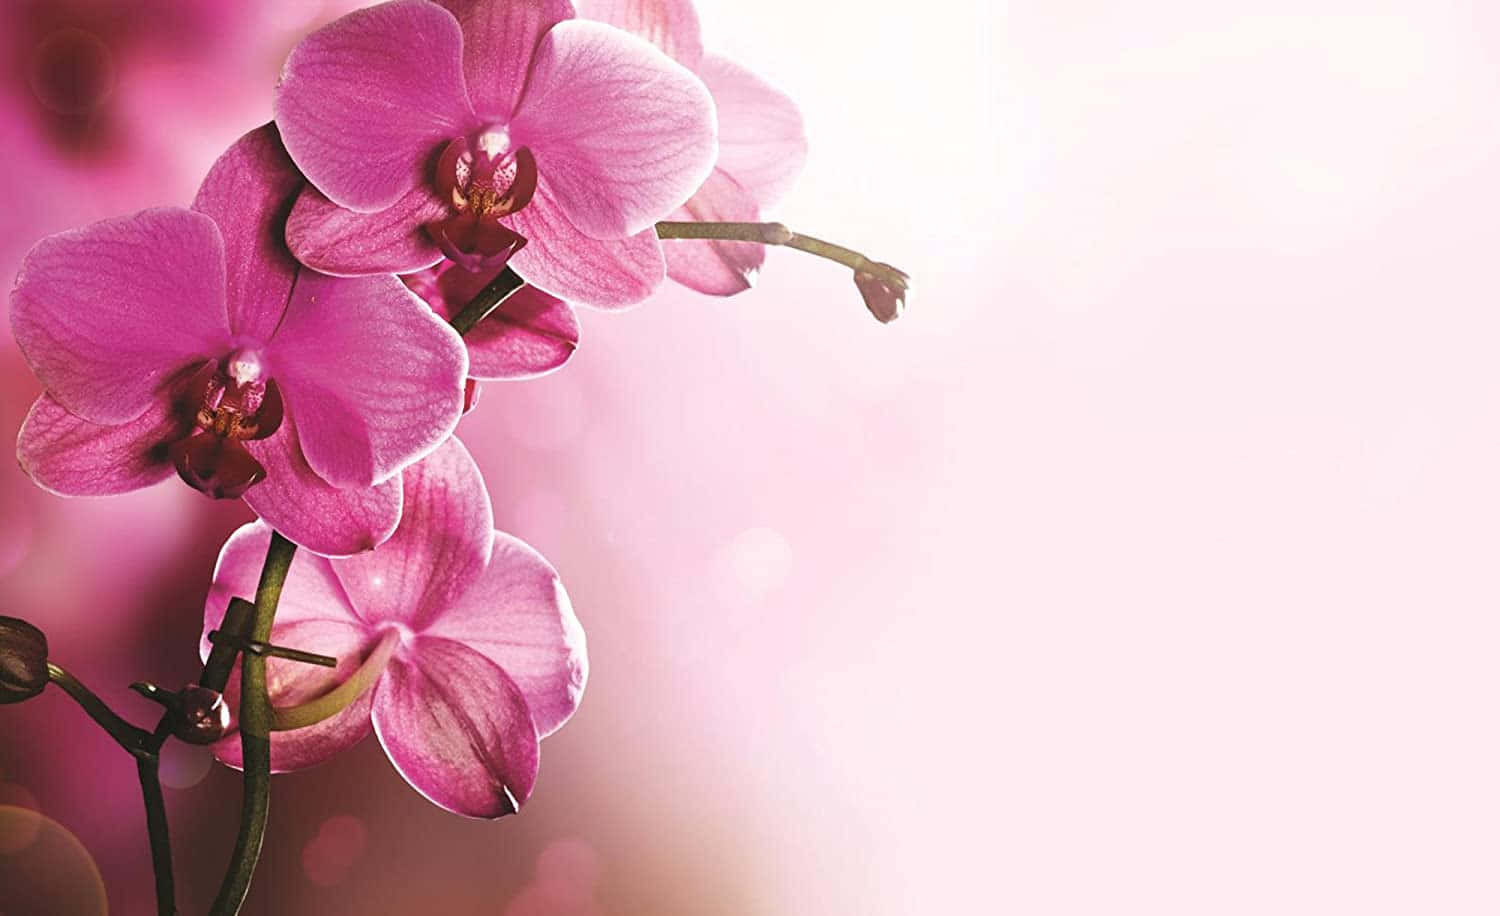 Stunning Orchid Flower in Full Bloom